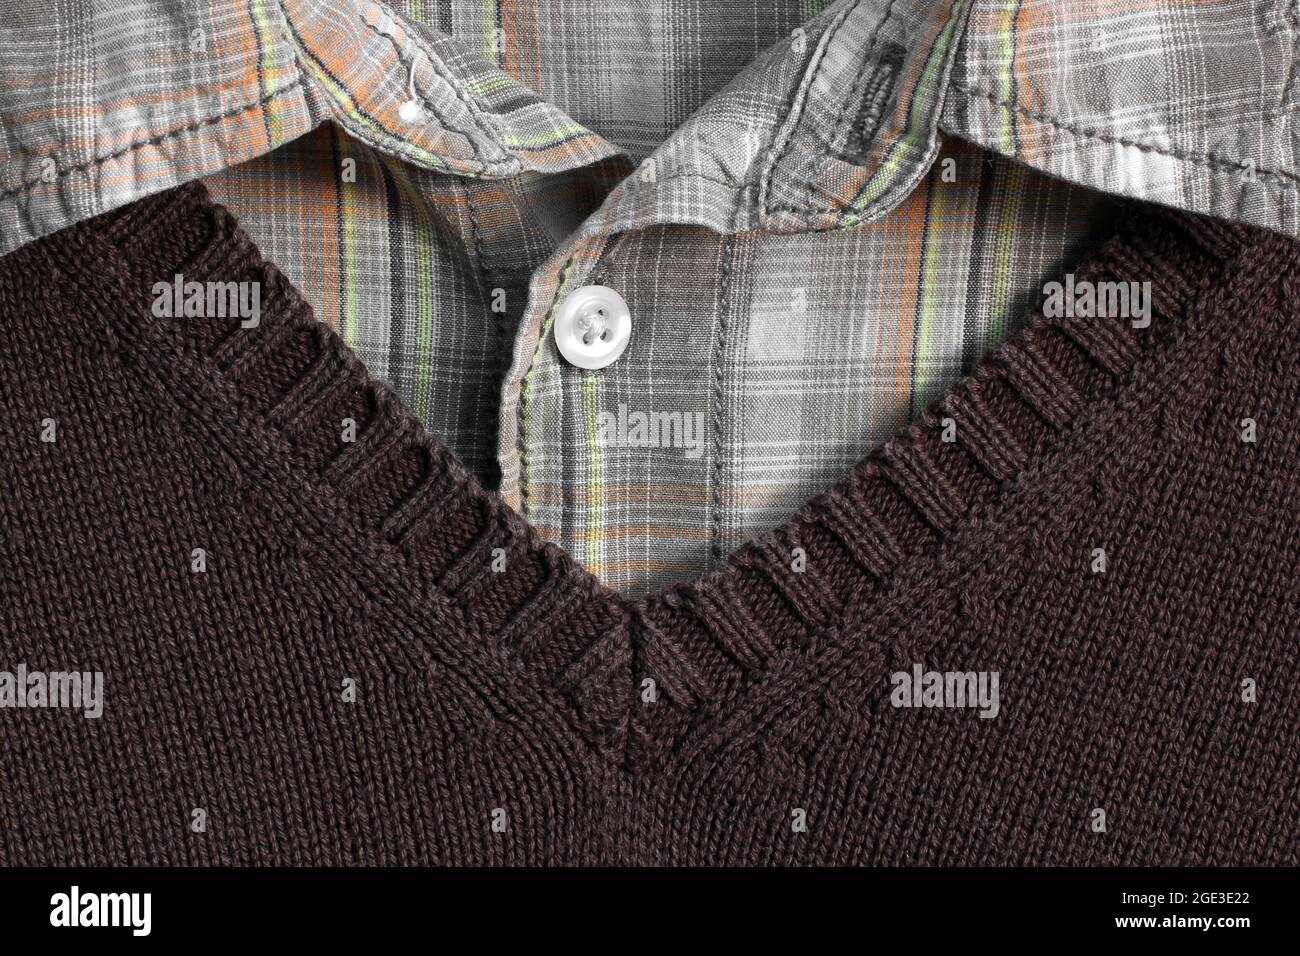 Checkered shirt under a sweater Stock Photo